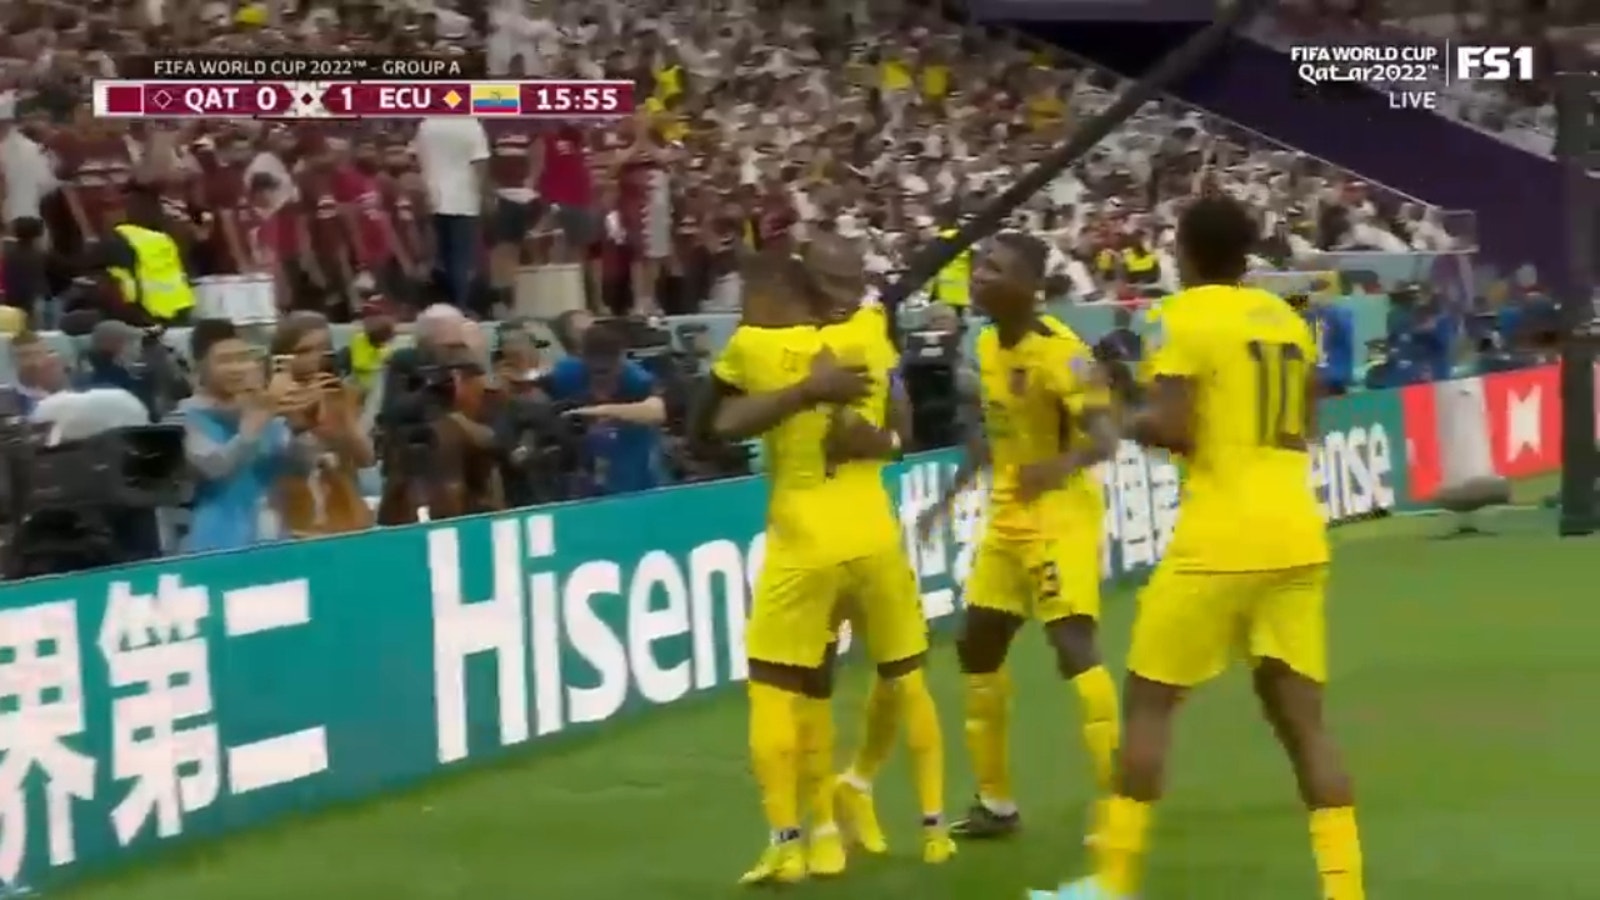 Ecuador's Enner Valencia is fouled and scores a PK against Qatar. 